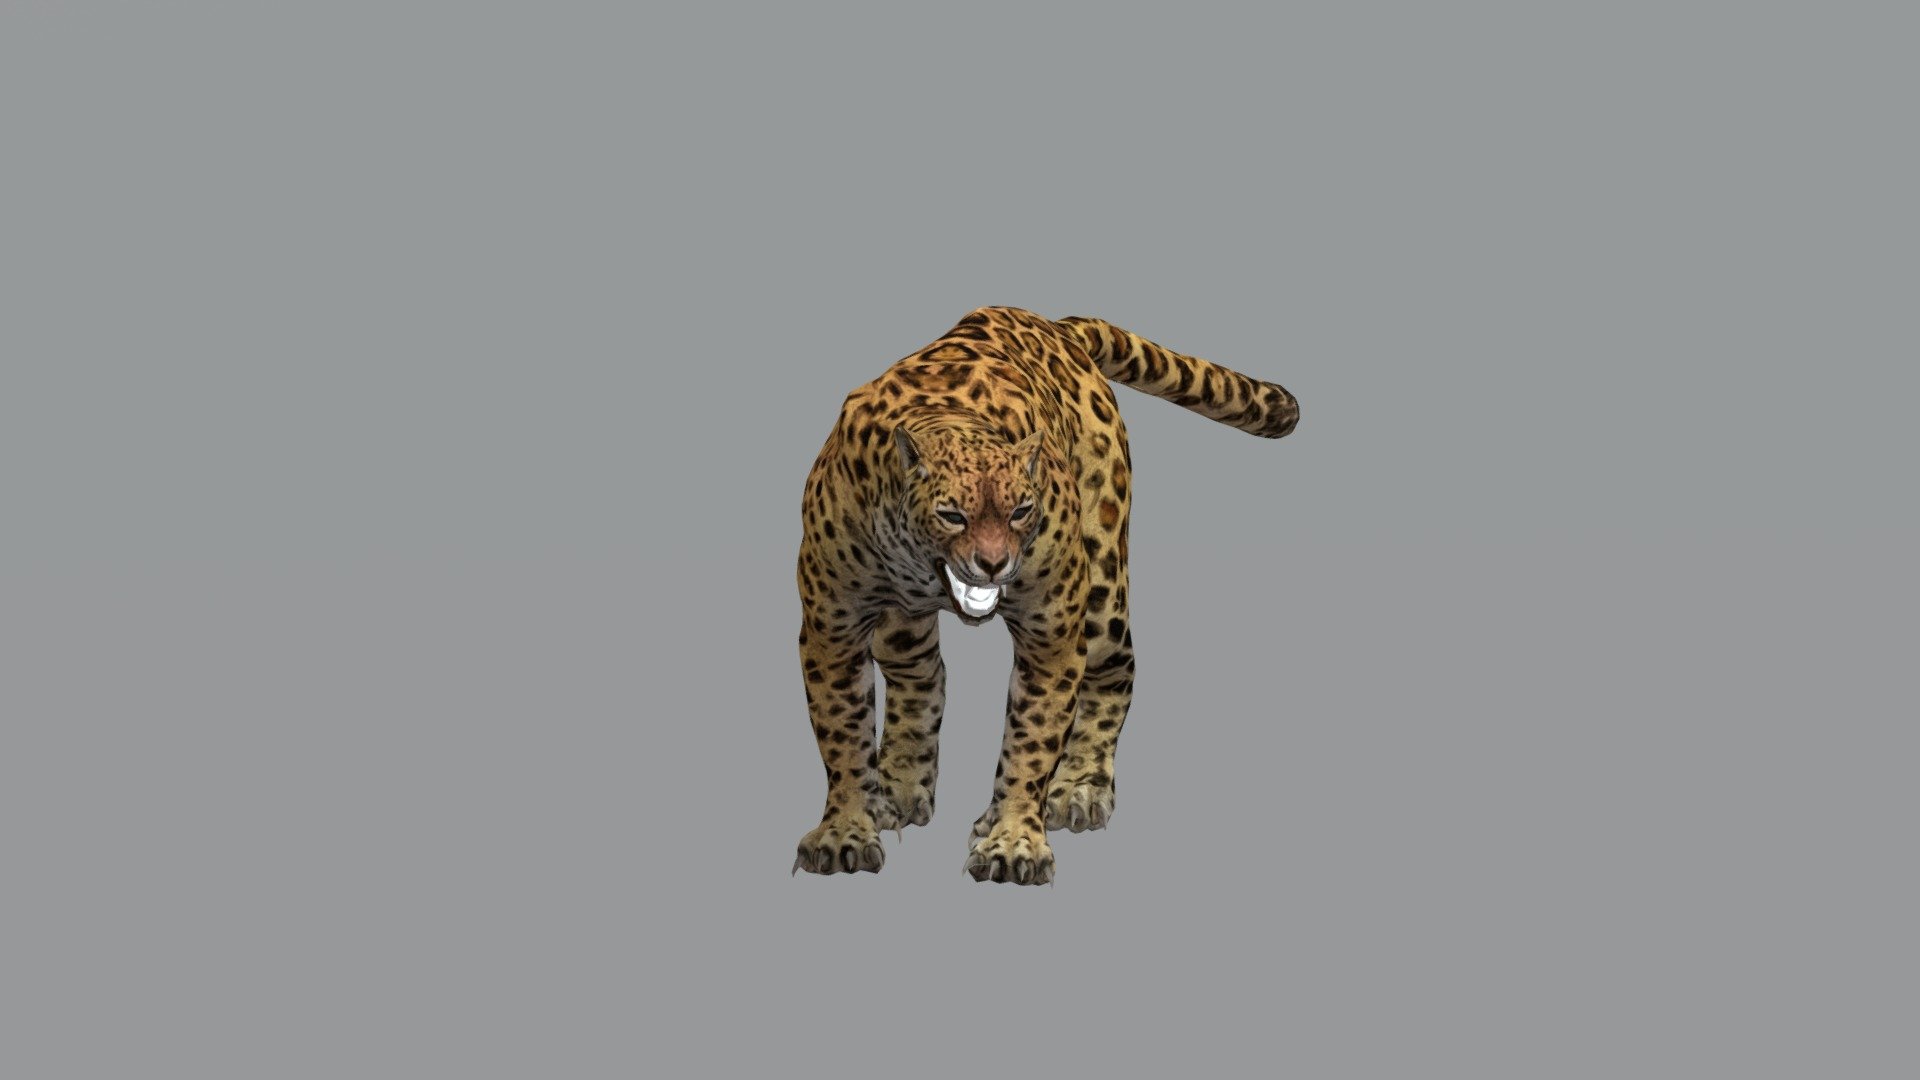 3D viewer will make Model Small , i suggest Blender or else , i checked it works .
🐆 Leopard  Quick Test  Texture + animation targets 
Fbx model 2 frames
retarget from mine 3d model